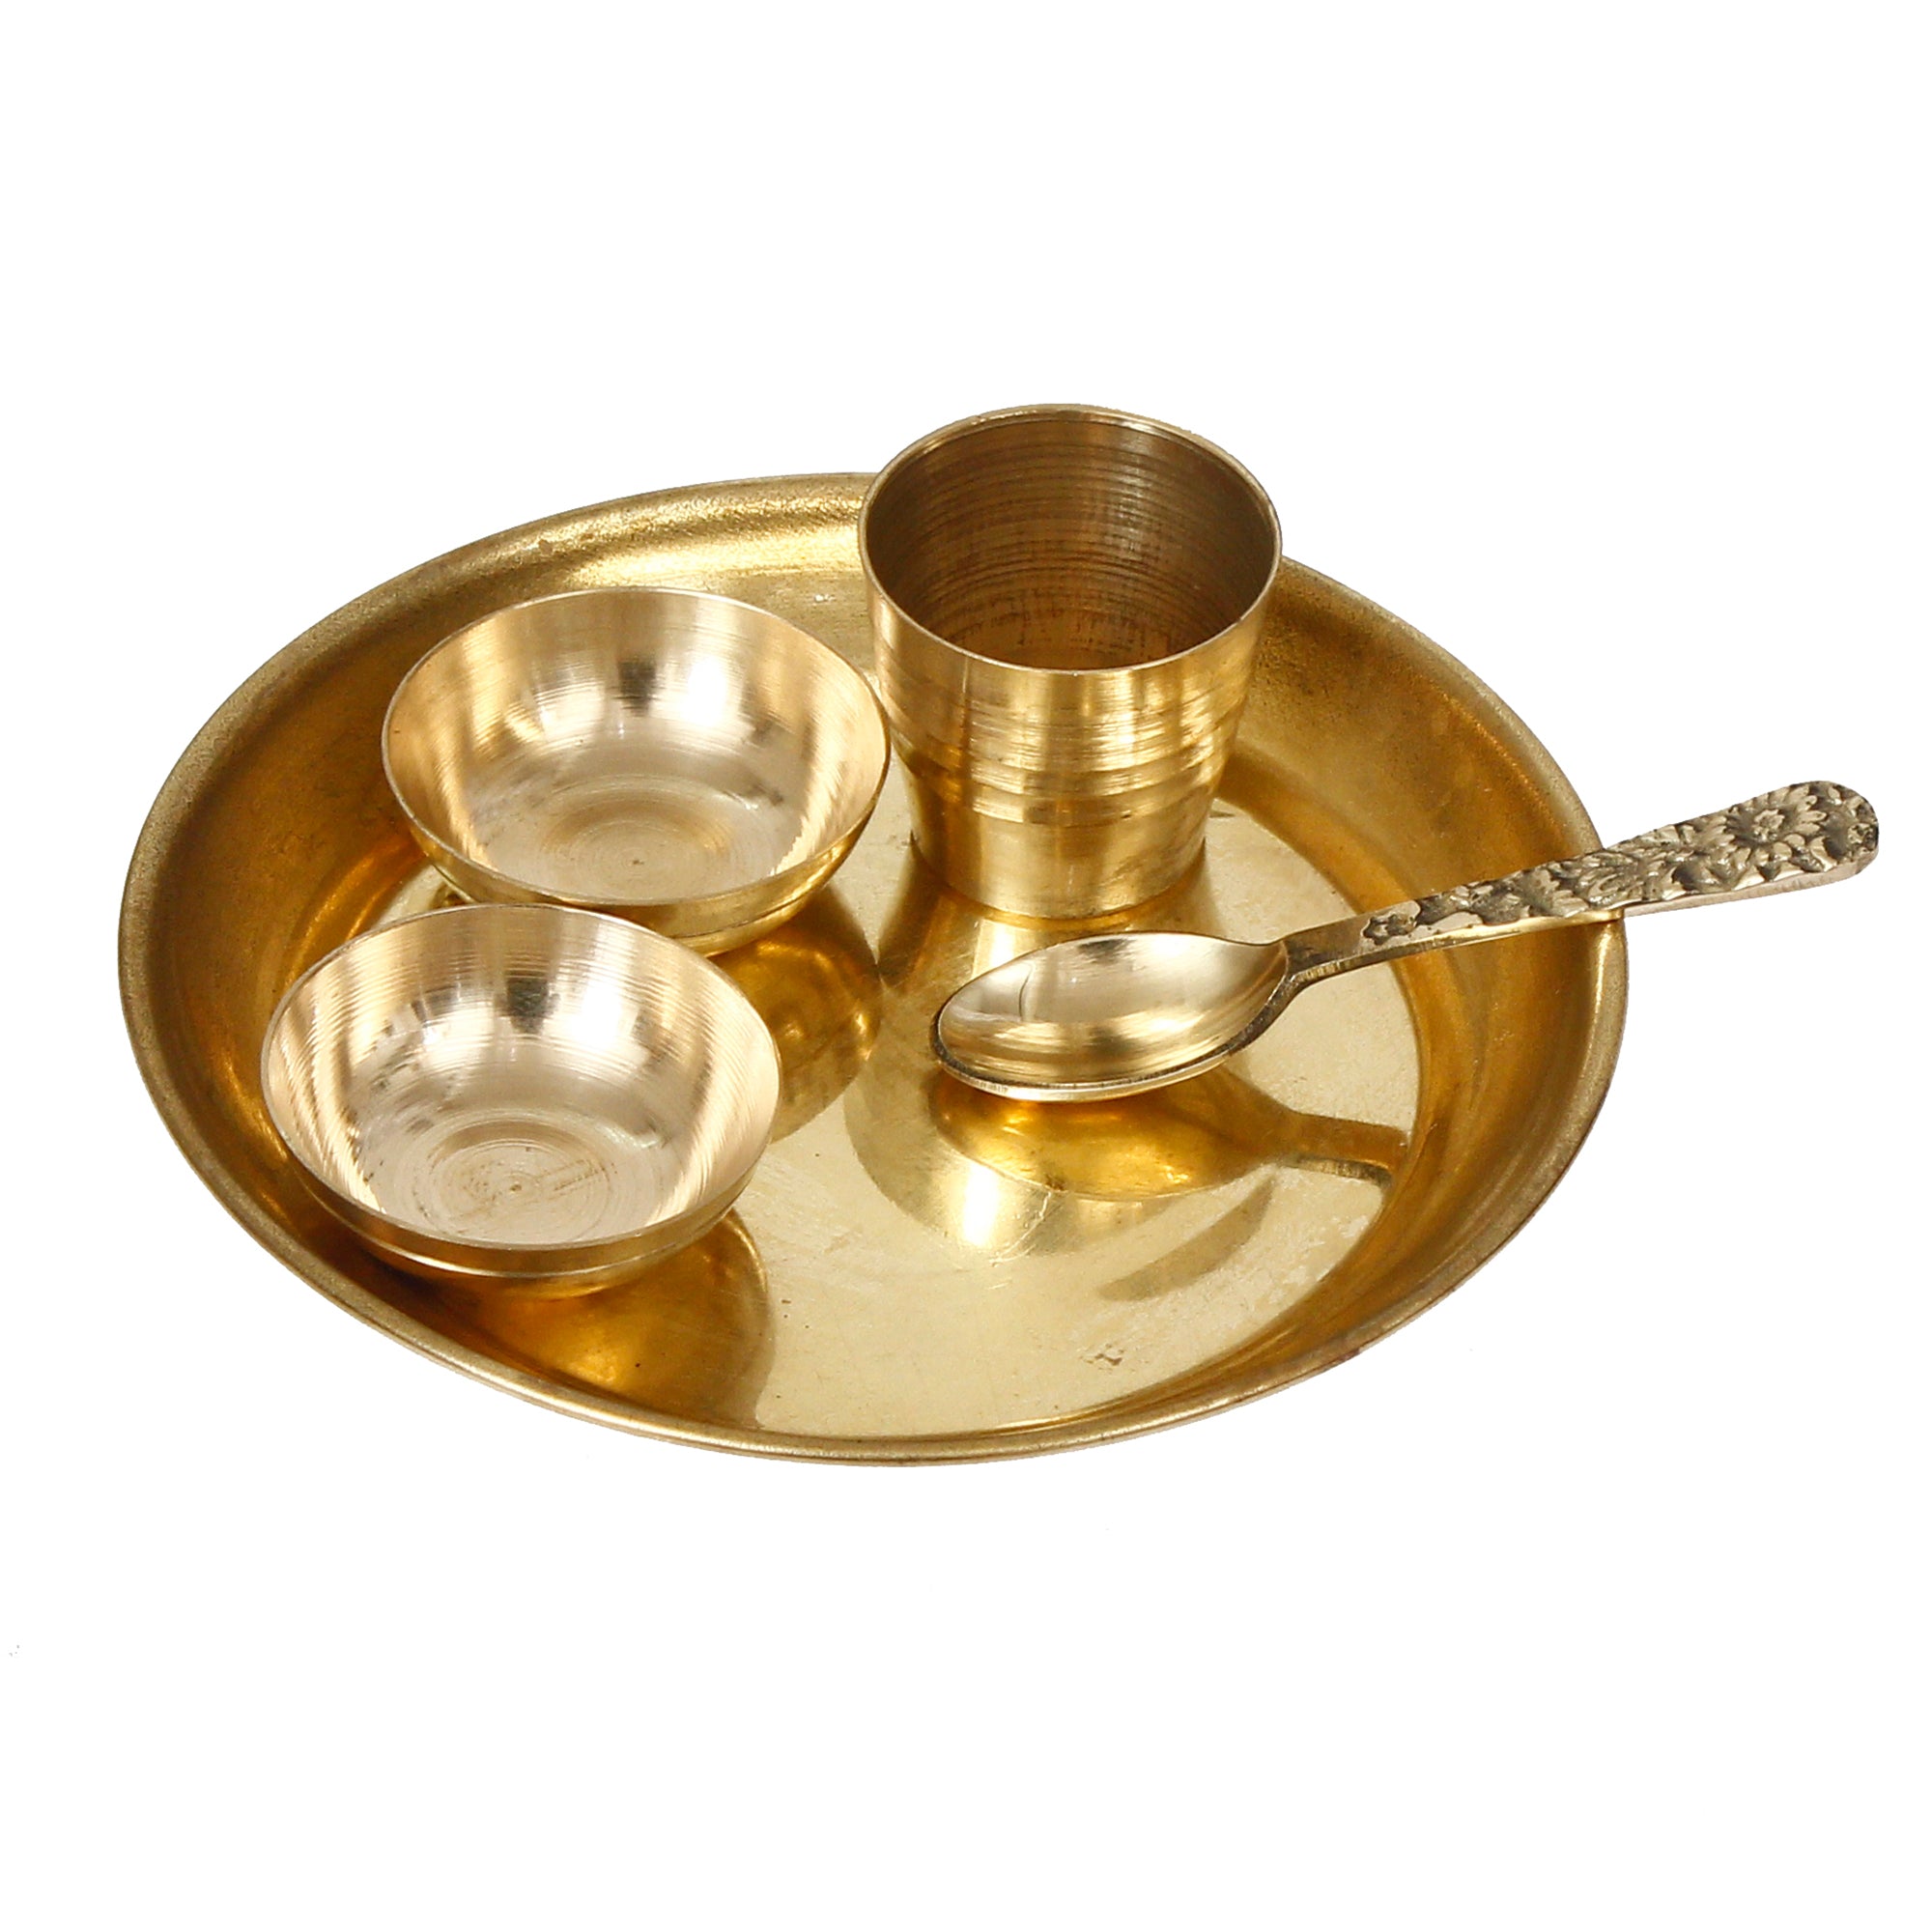 5 Inch Brass Pooja Thali with 2 Katori/Bowls, 1 Spoon and 1 Glass 2